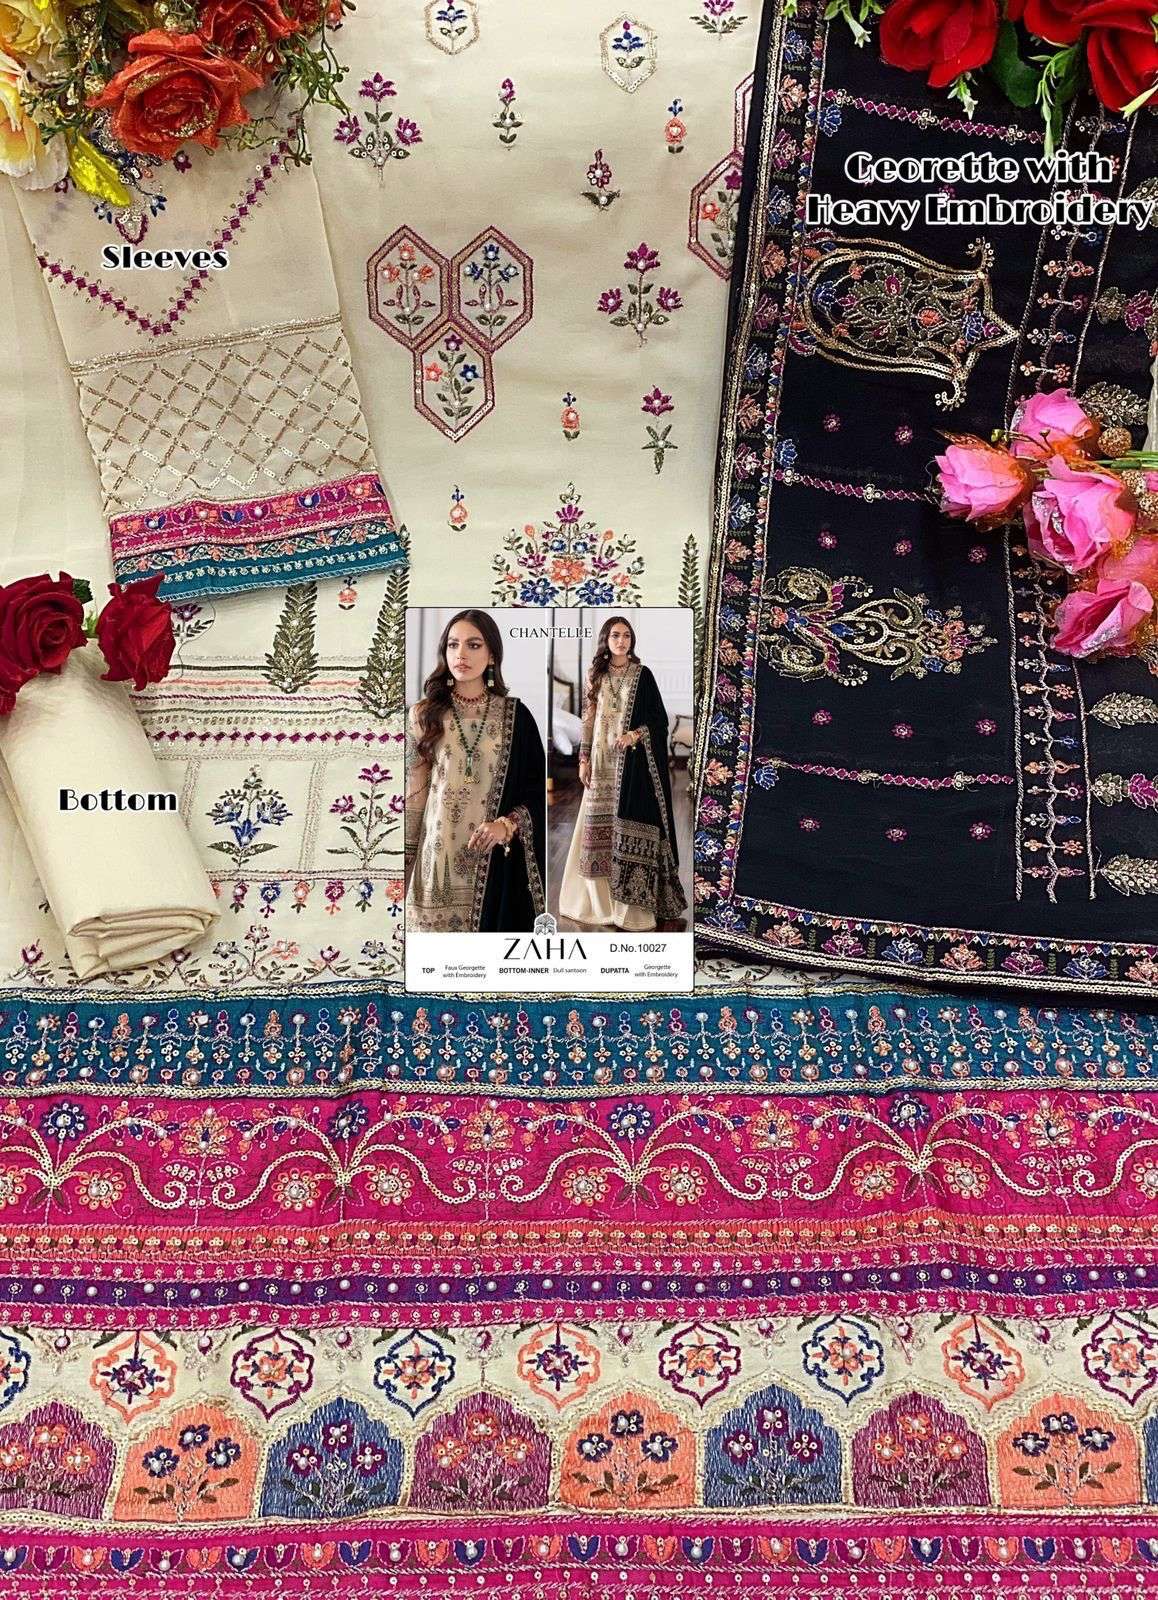 Zaha 10027 Georgette Embroidered Salwar Kameez Wholesale catalog